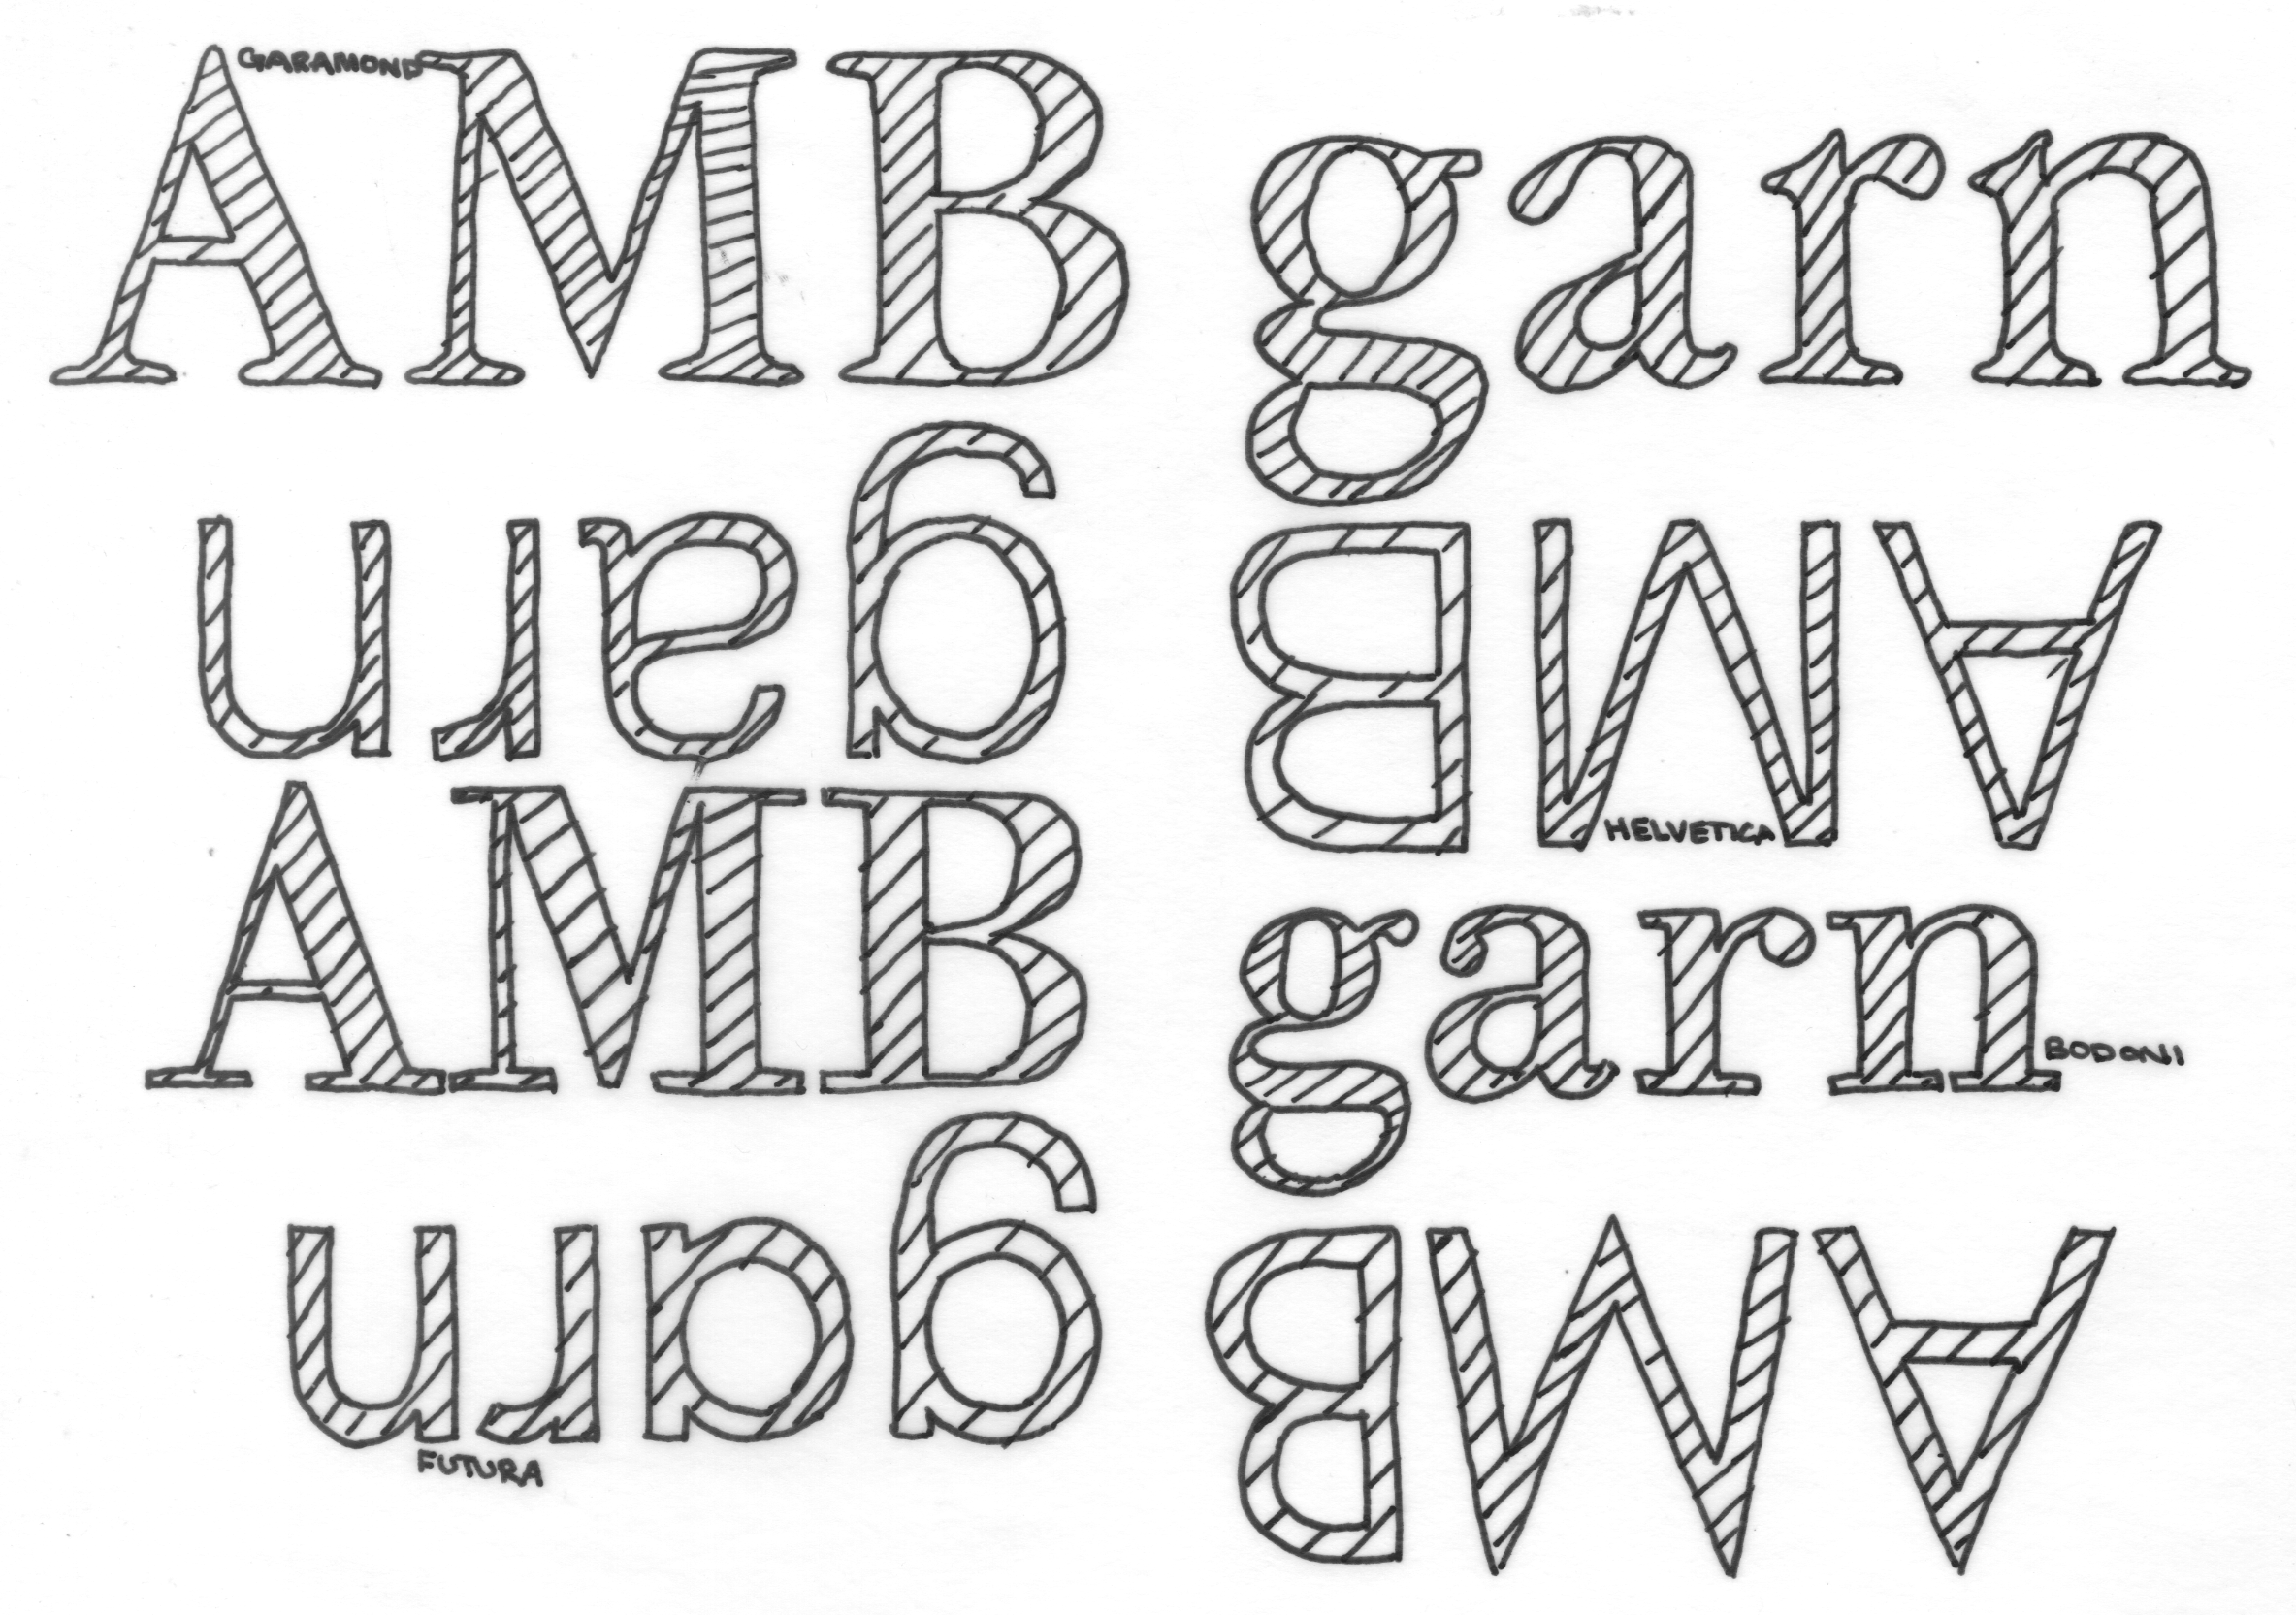 AMB garn in various typefaces